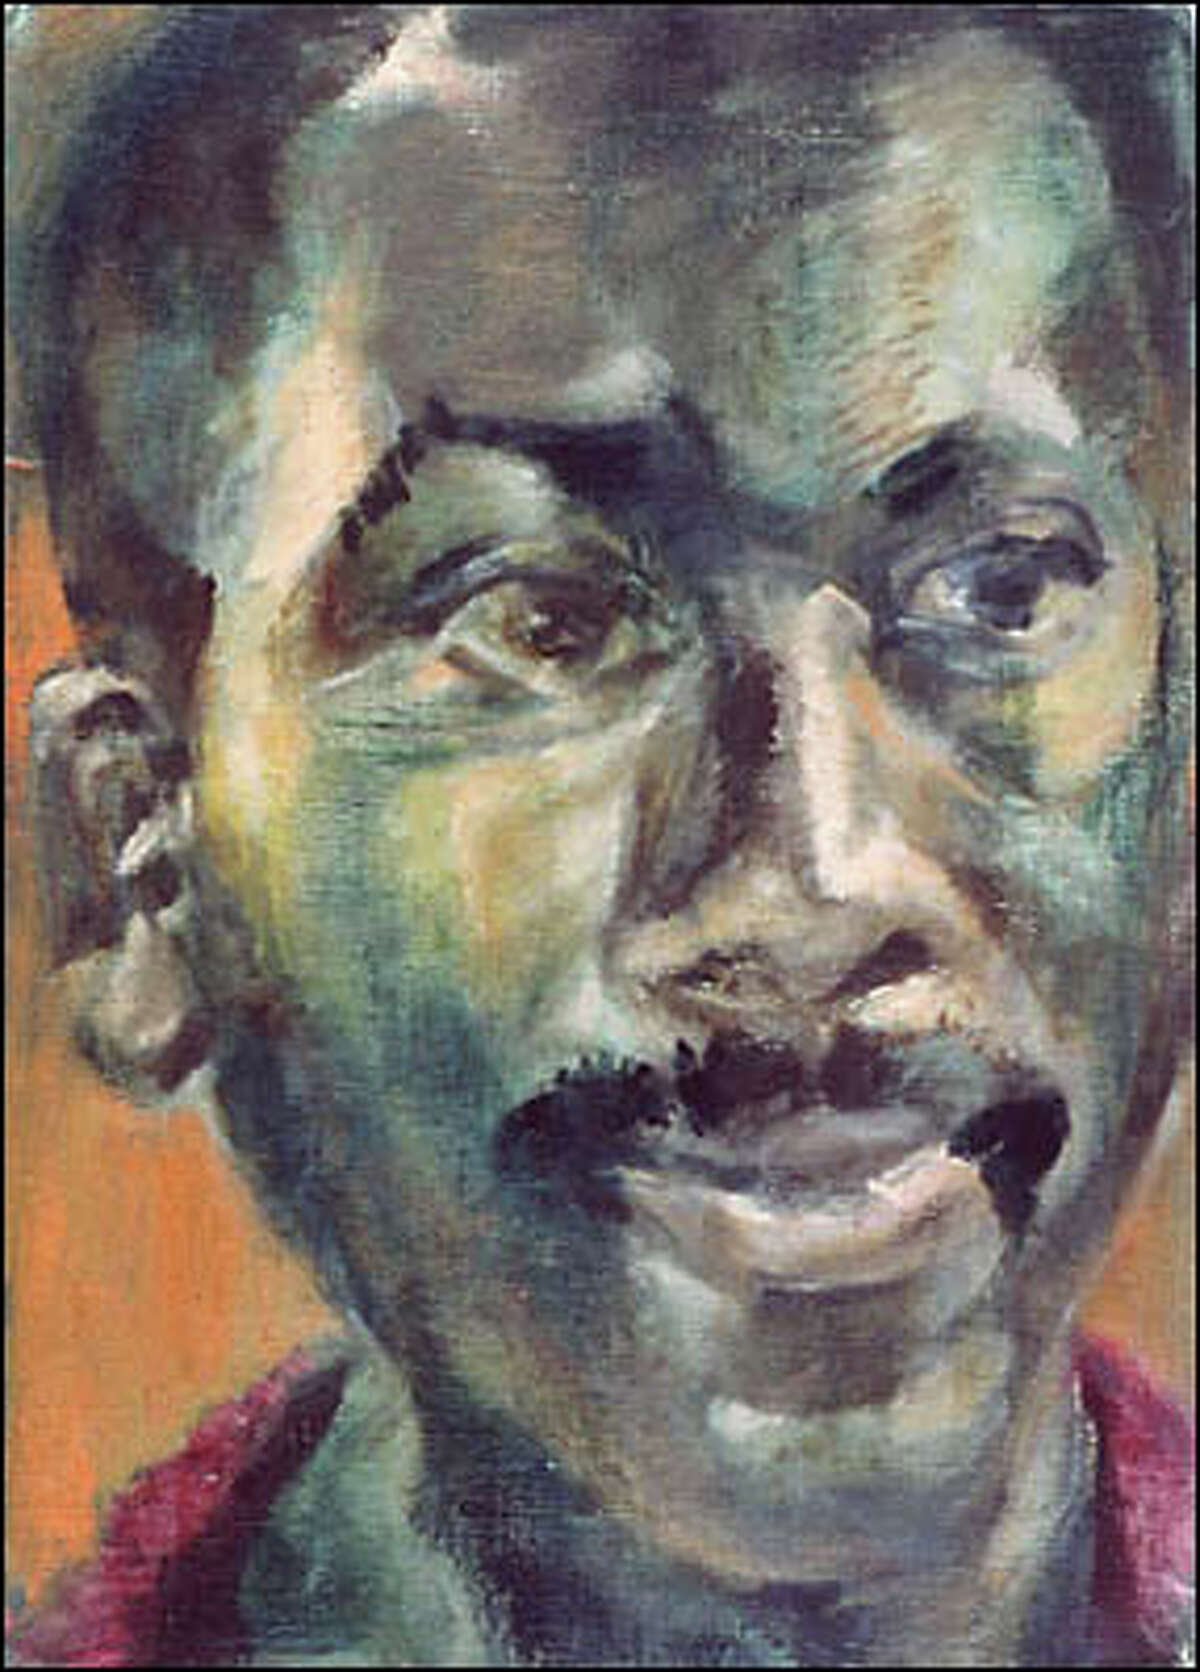 Portrait of Jacob Lawrence by Gwendolyn Knight